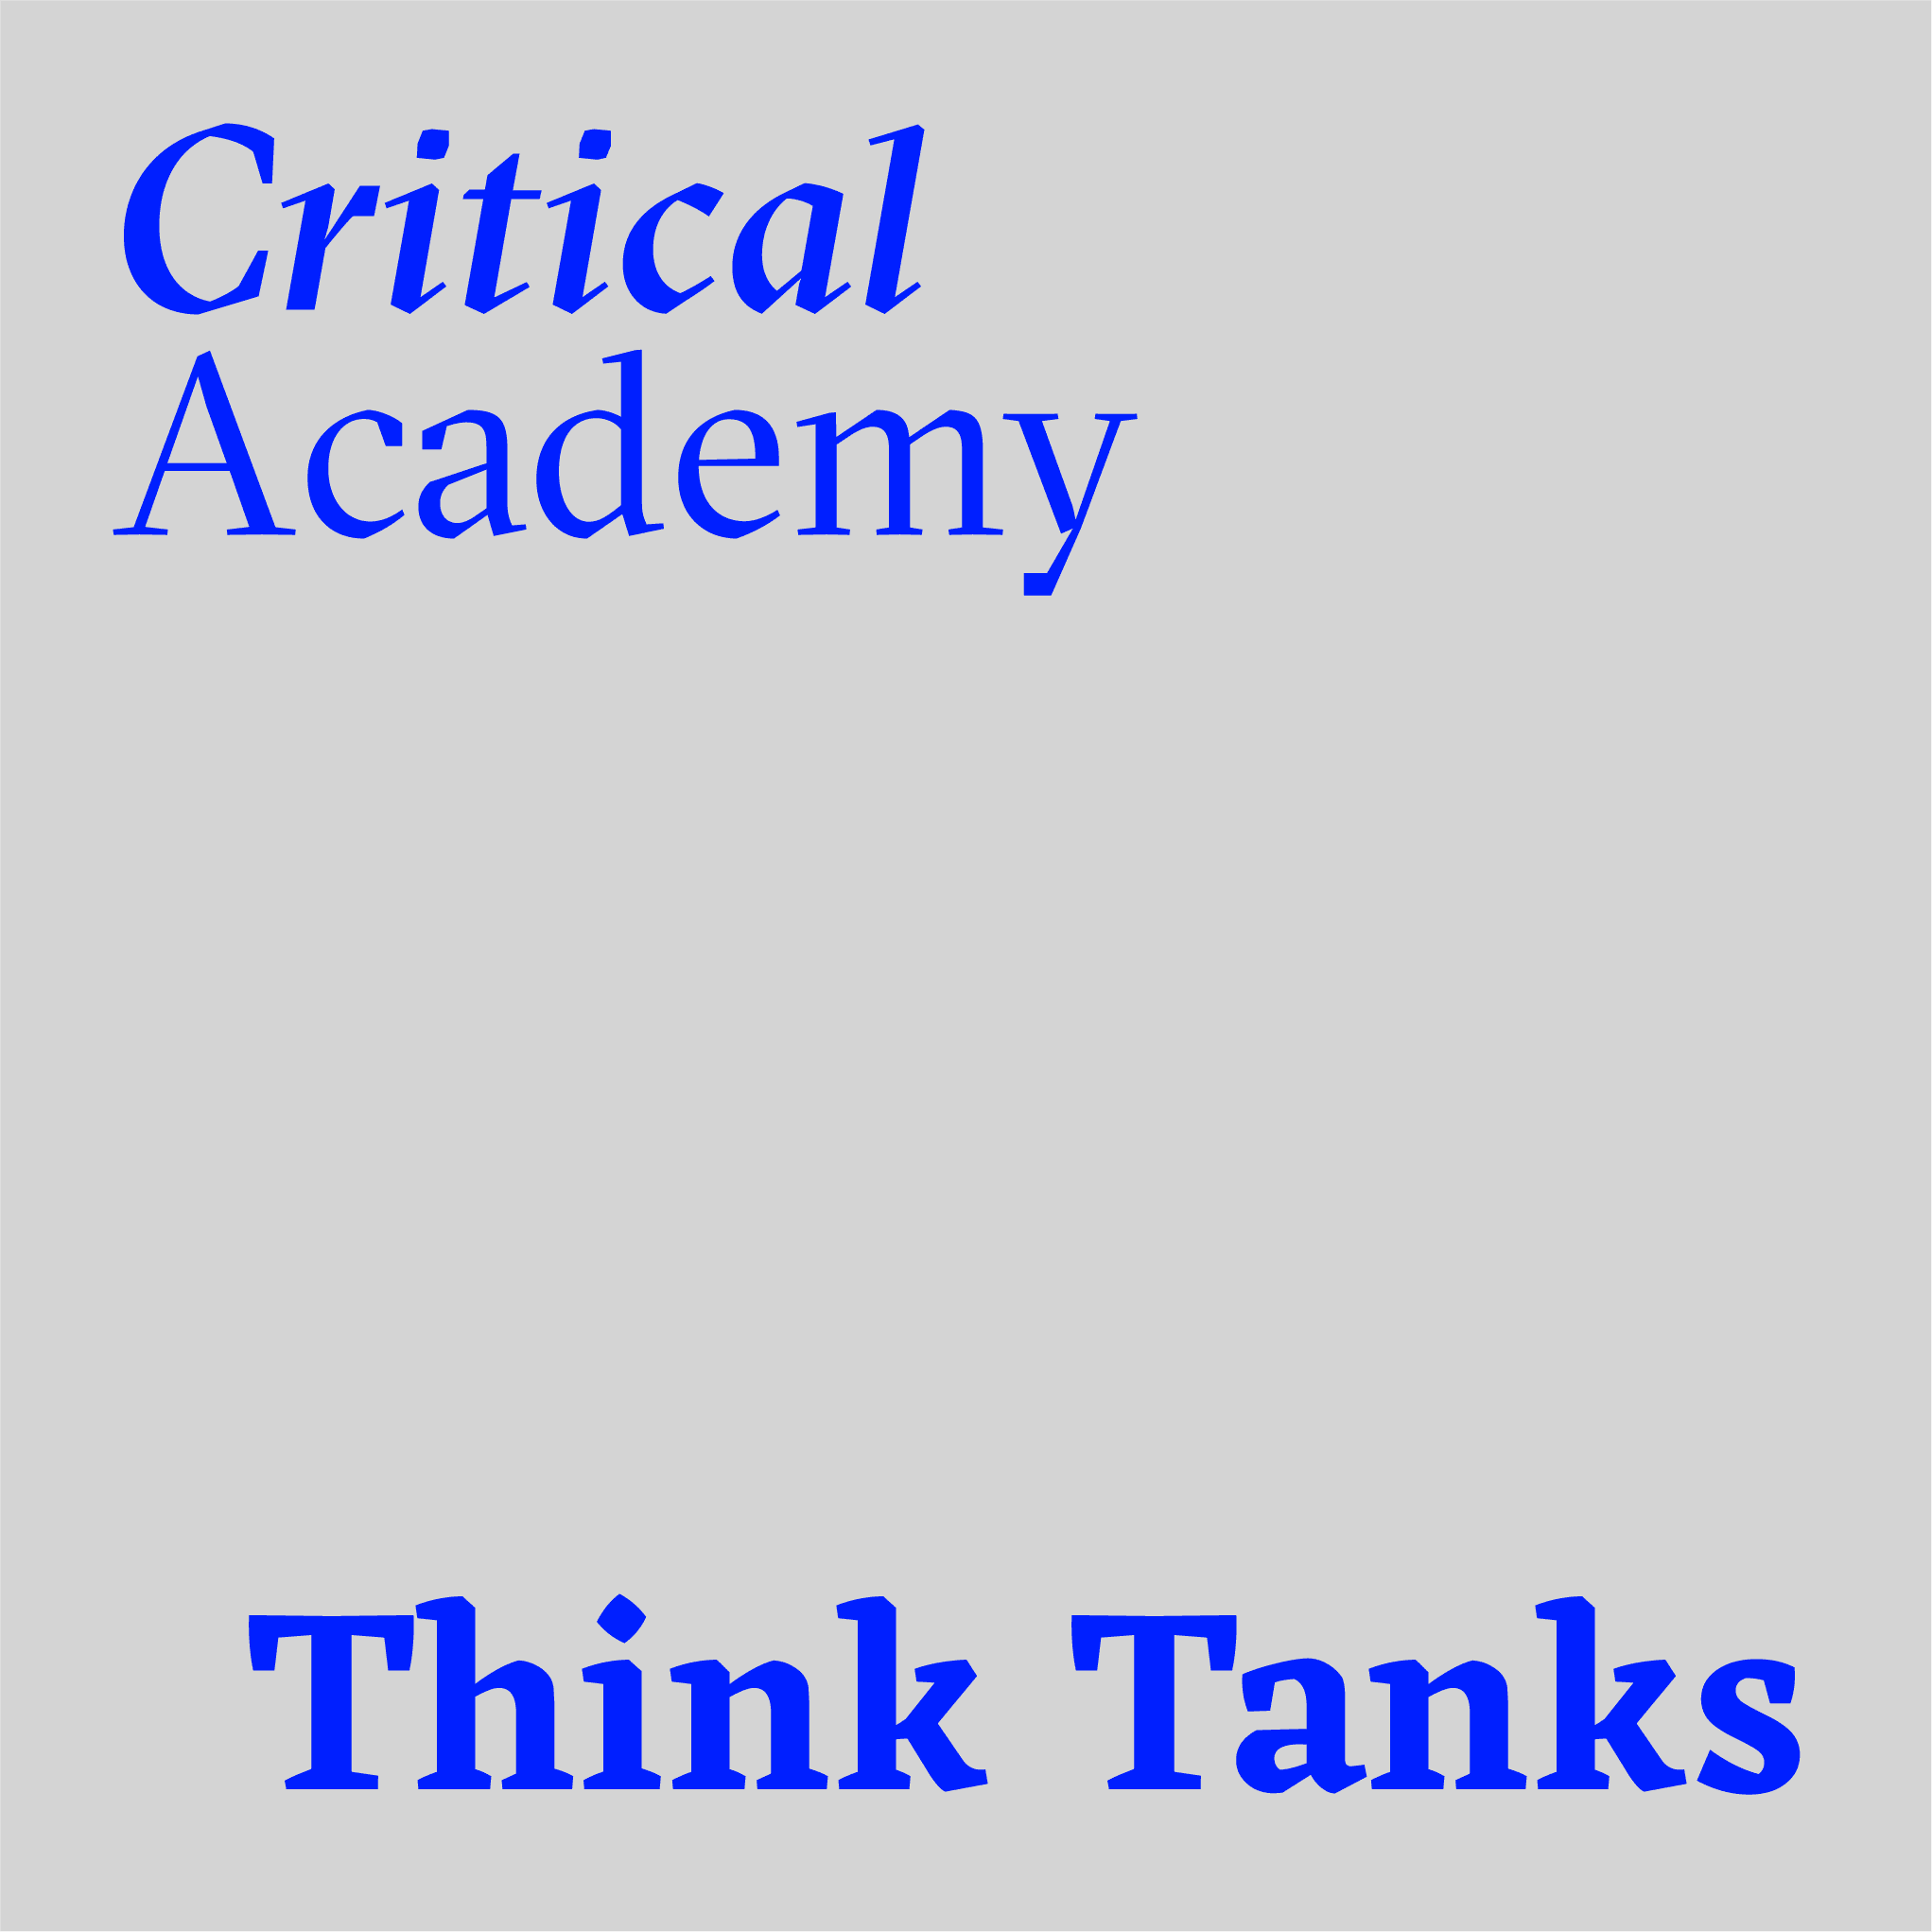 Critical Academy Think Tanks